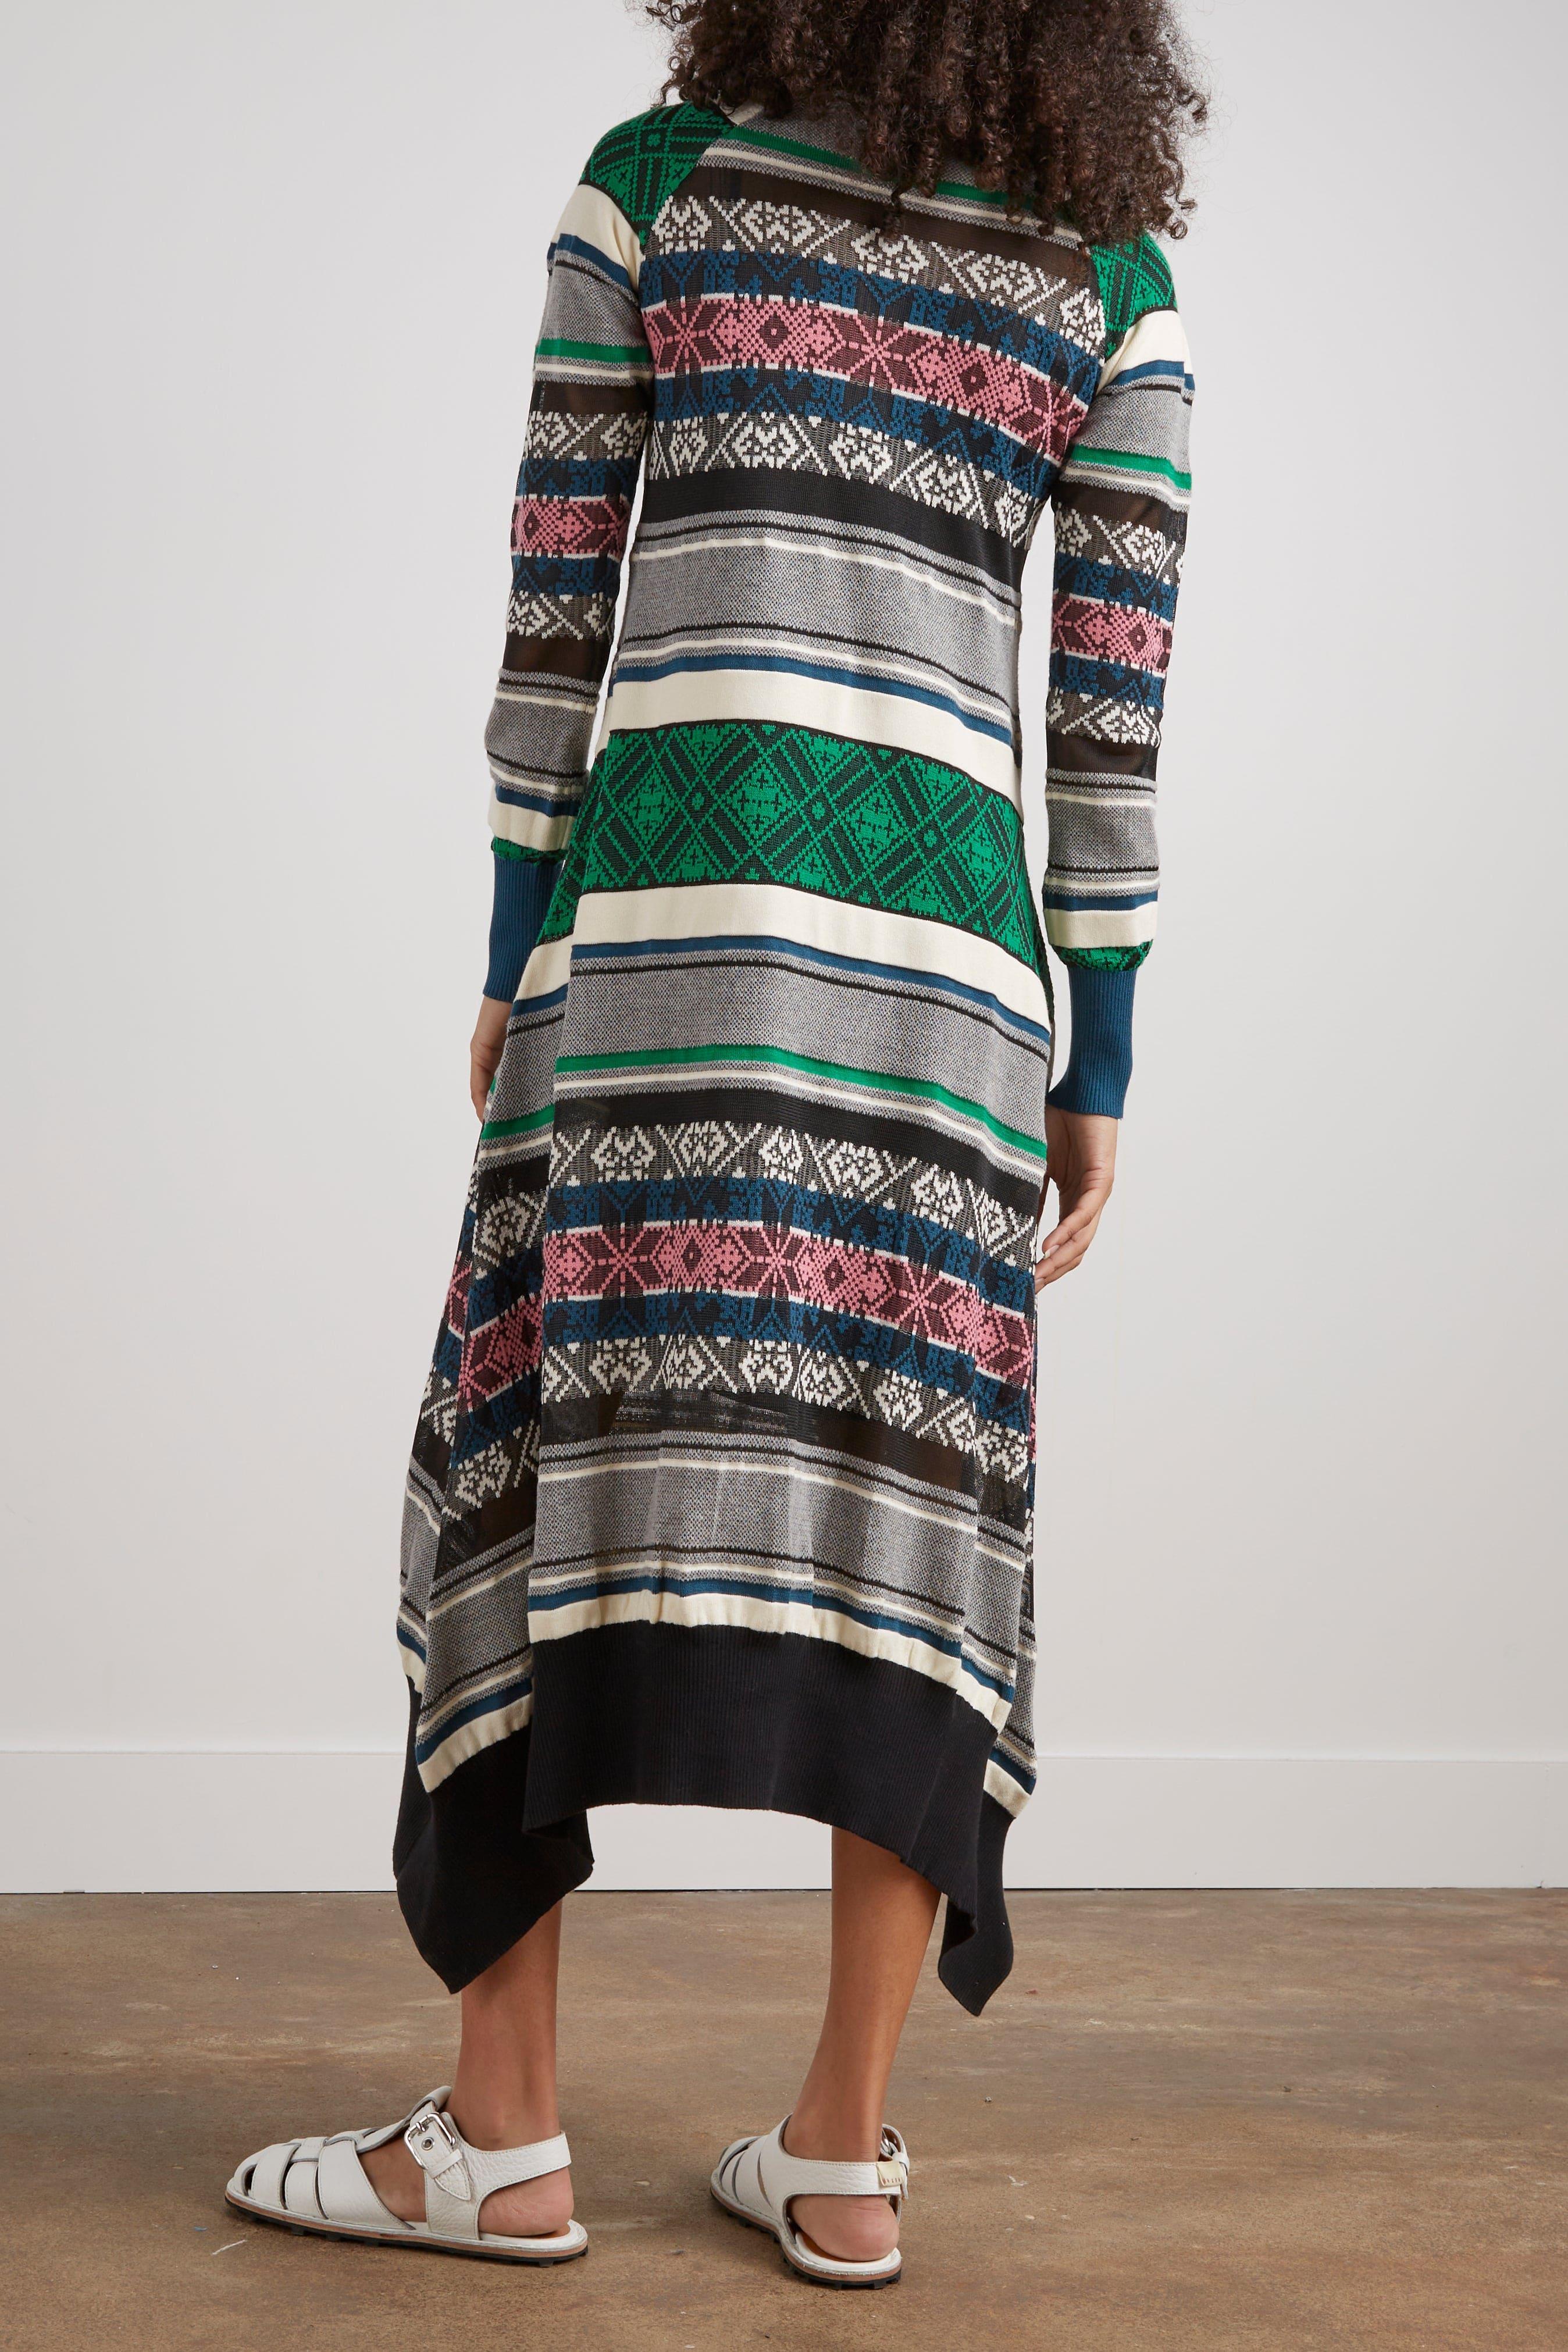 Sacai Women's Rug Jacquard Knit Dress